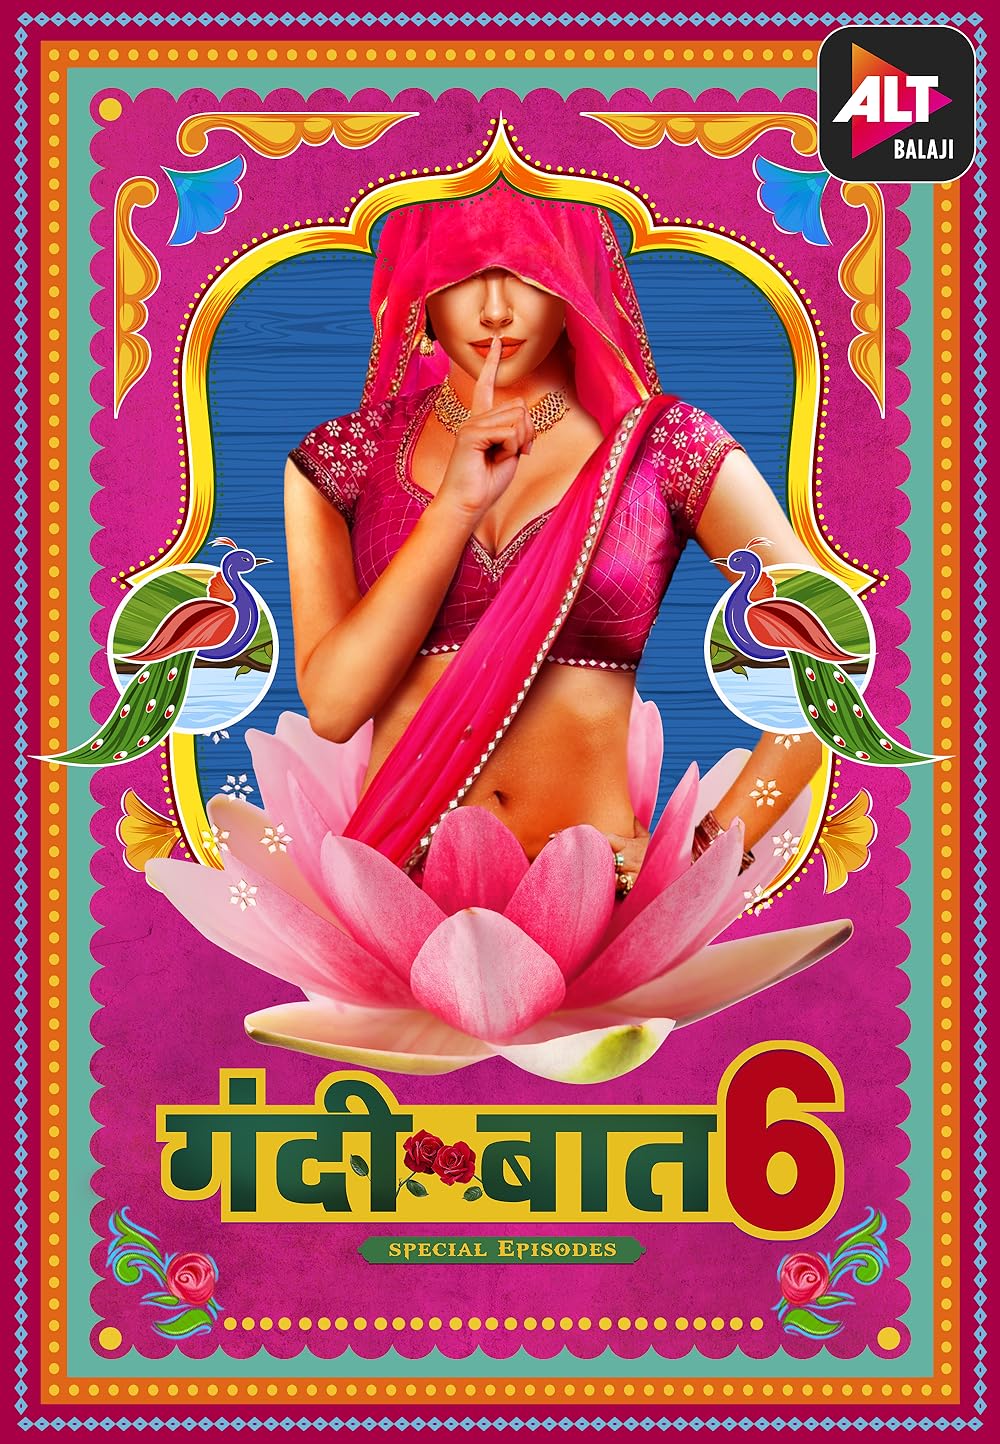 Download Gandi Baat 2020 (Season 4) Hindi {ALT Balaji Series} All Episodes WeB-DL || 720p [350MB]